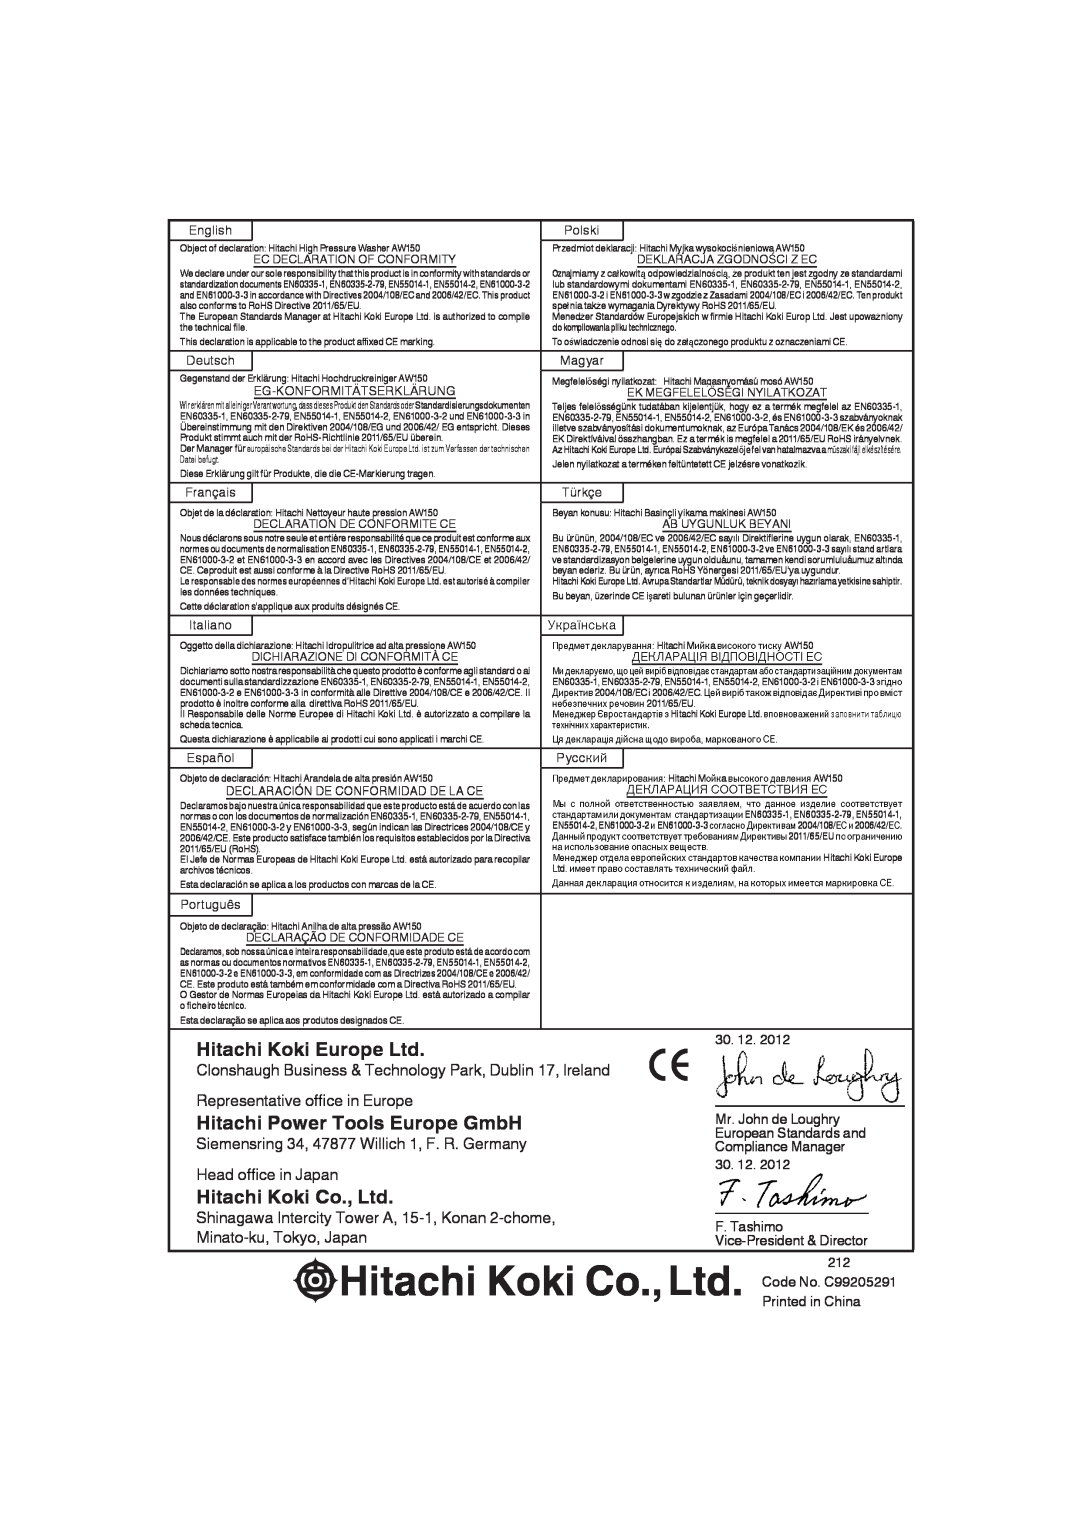 Hitachi Koki USA AW 150 manual Hitachi Power Tools Europe GmbH, Clonshaugh Business & Technology Park, Dublin 17, lreland 